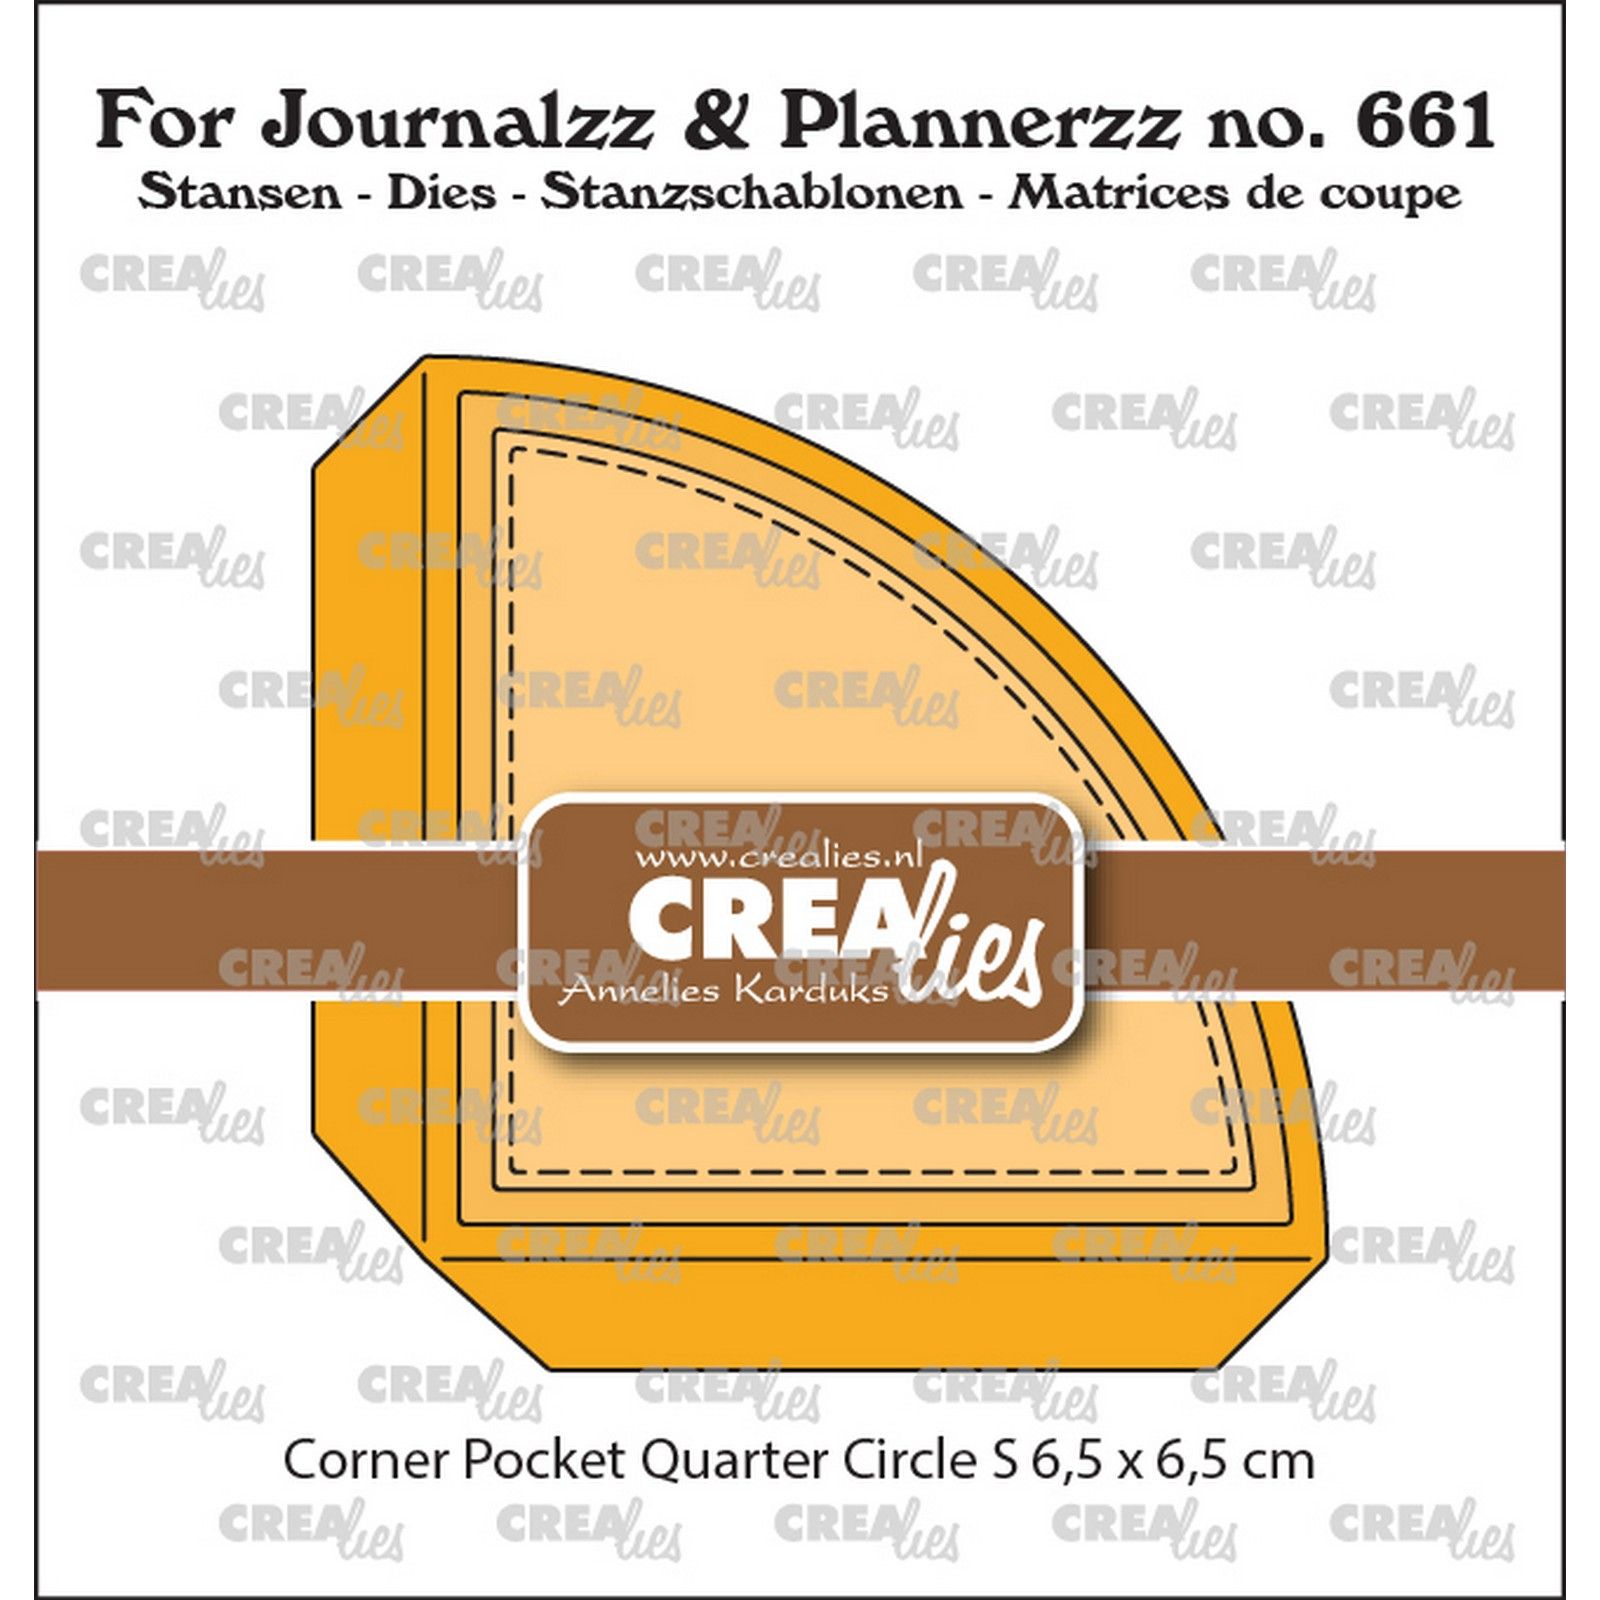 Crealies • For Journalzz & Plannerzz Corner Pocket Quarter Circle Small 6,5cm